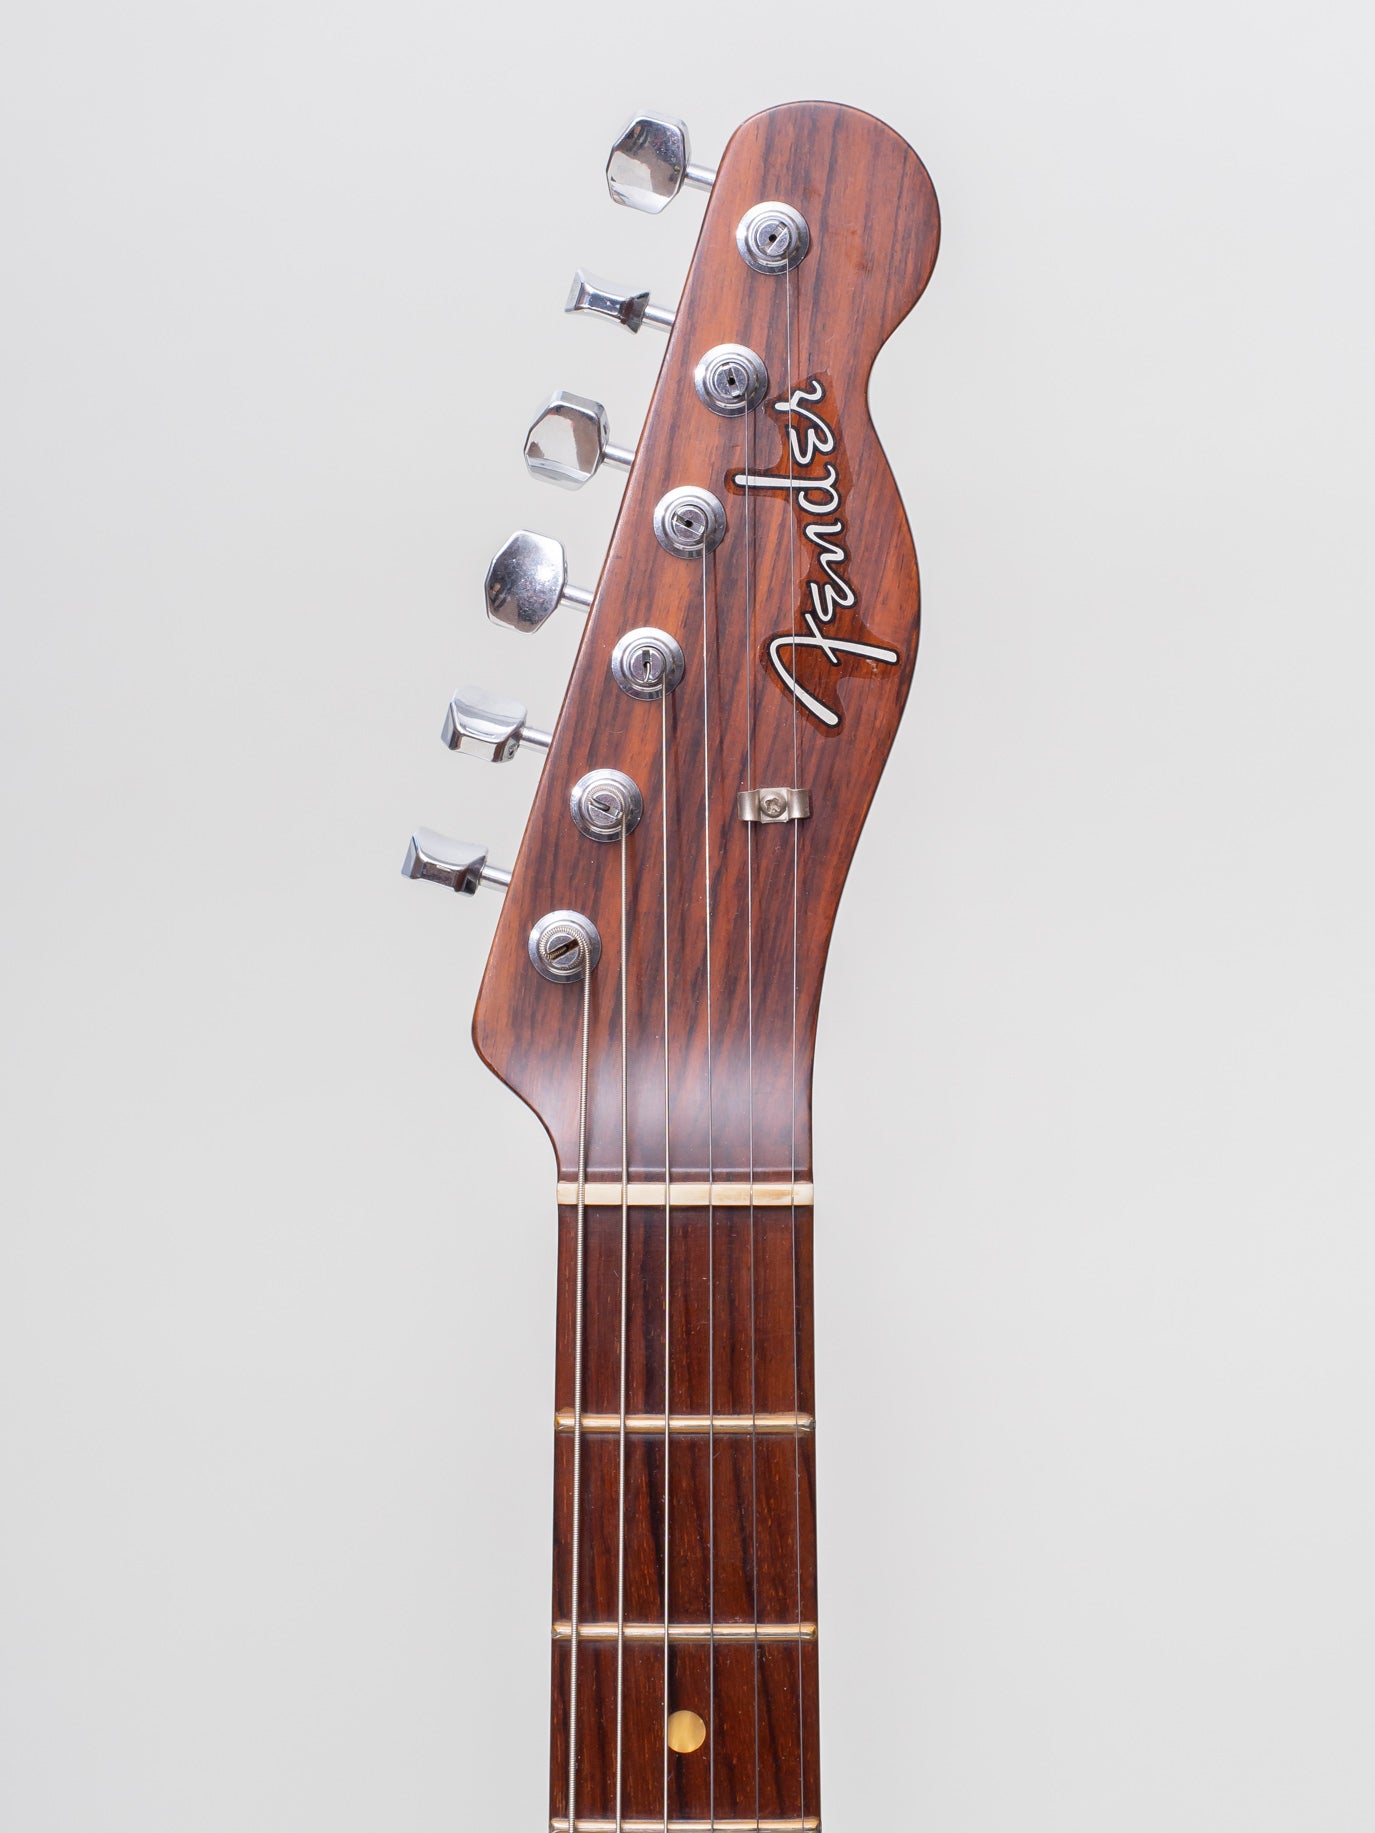 2007 Fender Rosewood Telecaster Custom Shop